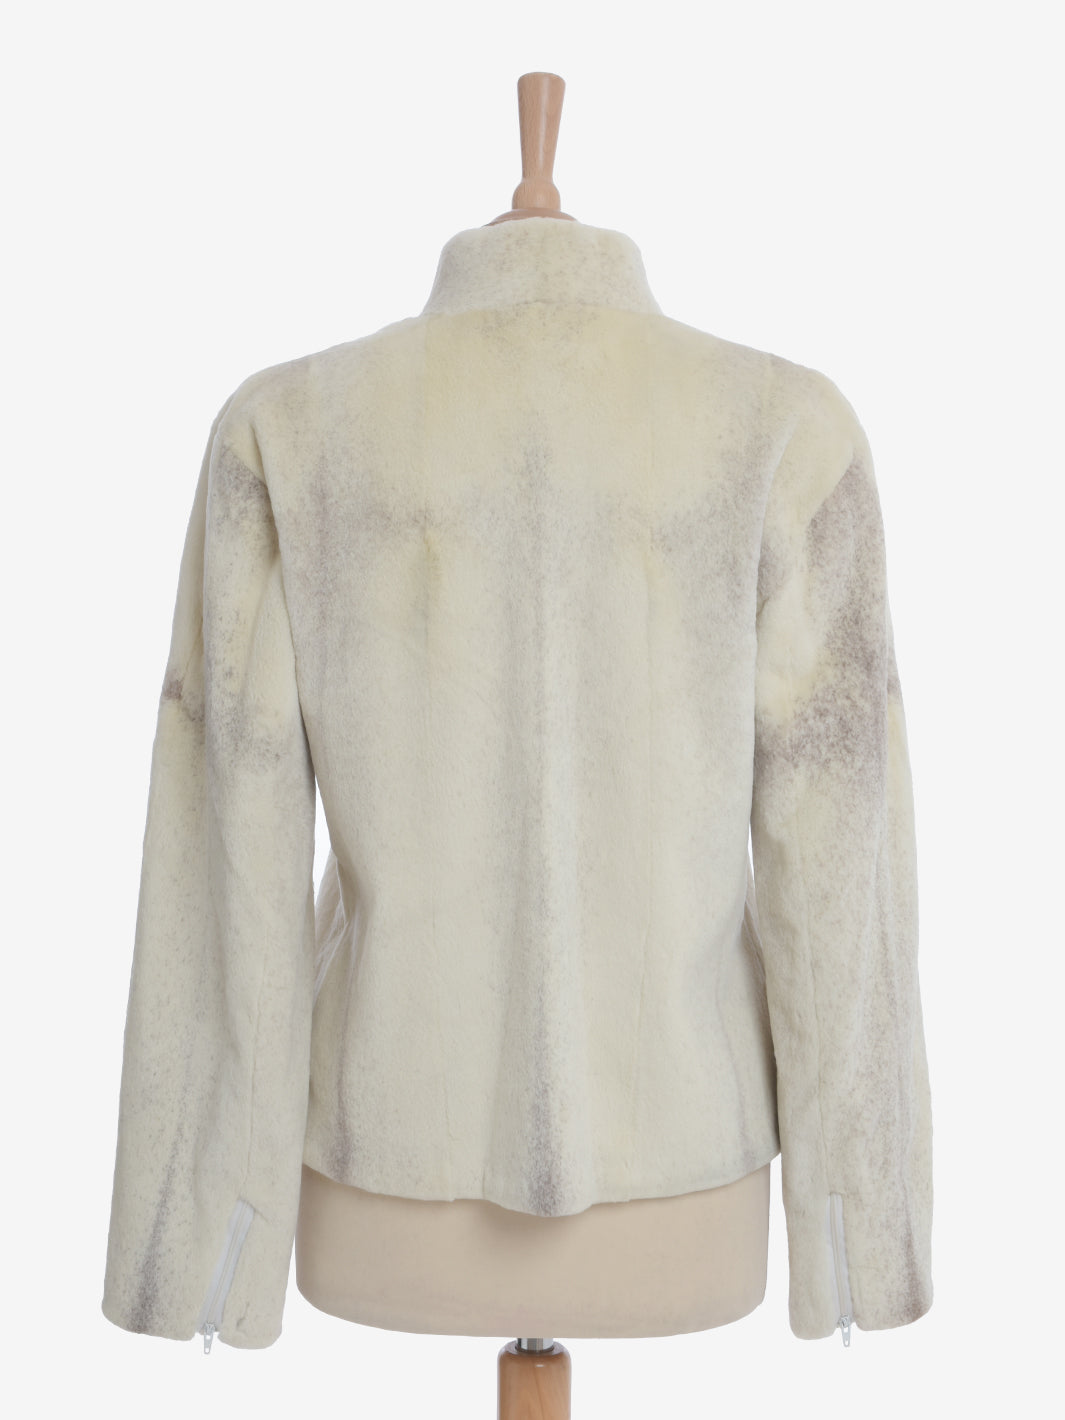 Vintage White Fur Coat